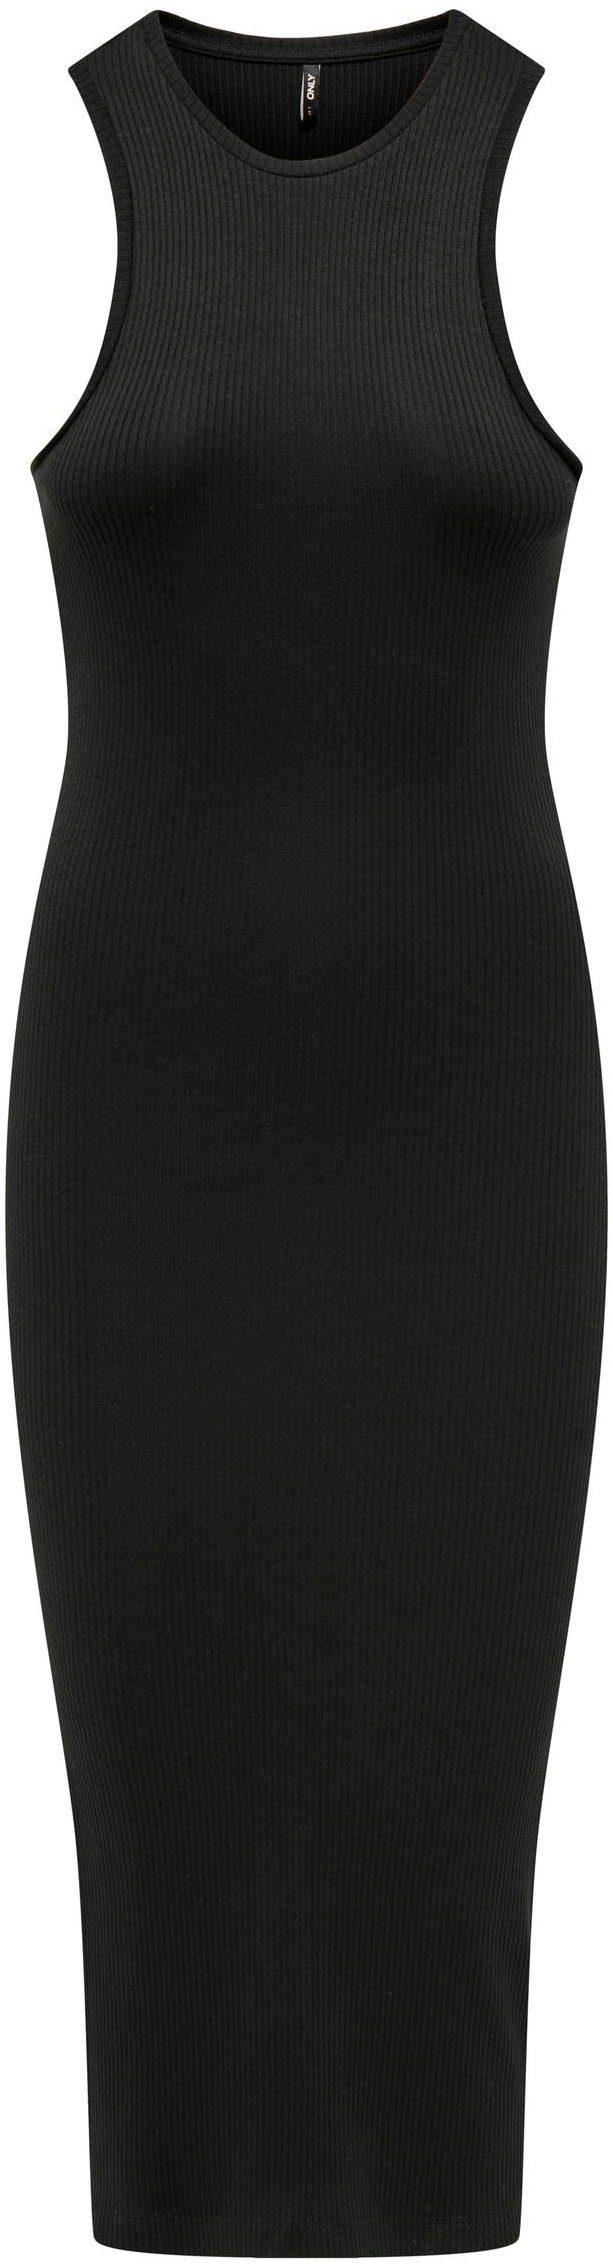 DRESS Jerseykleid MIDI Black NOOS ONLBELFAST S/L JRS ONLY